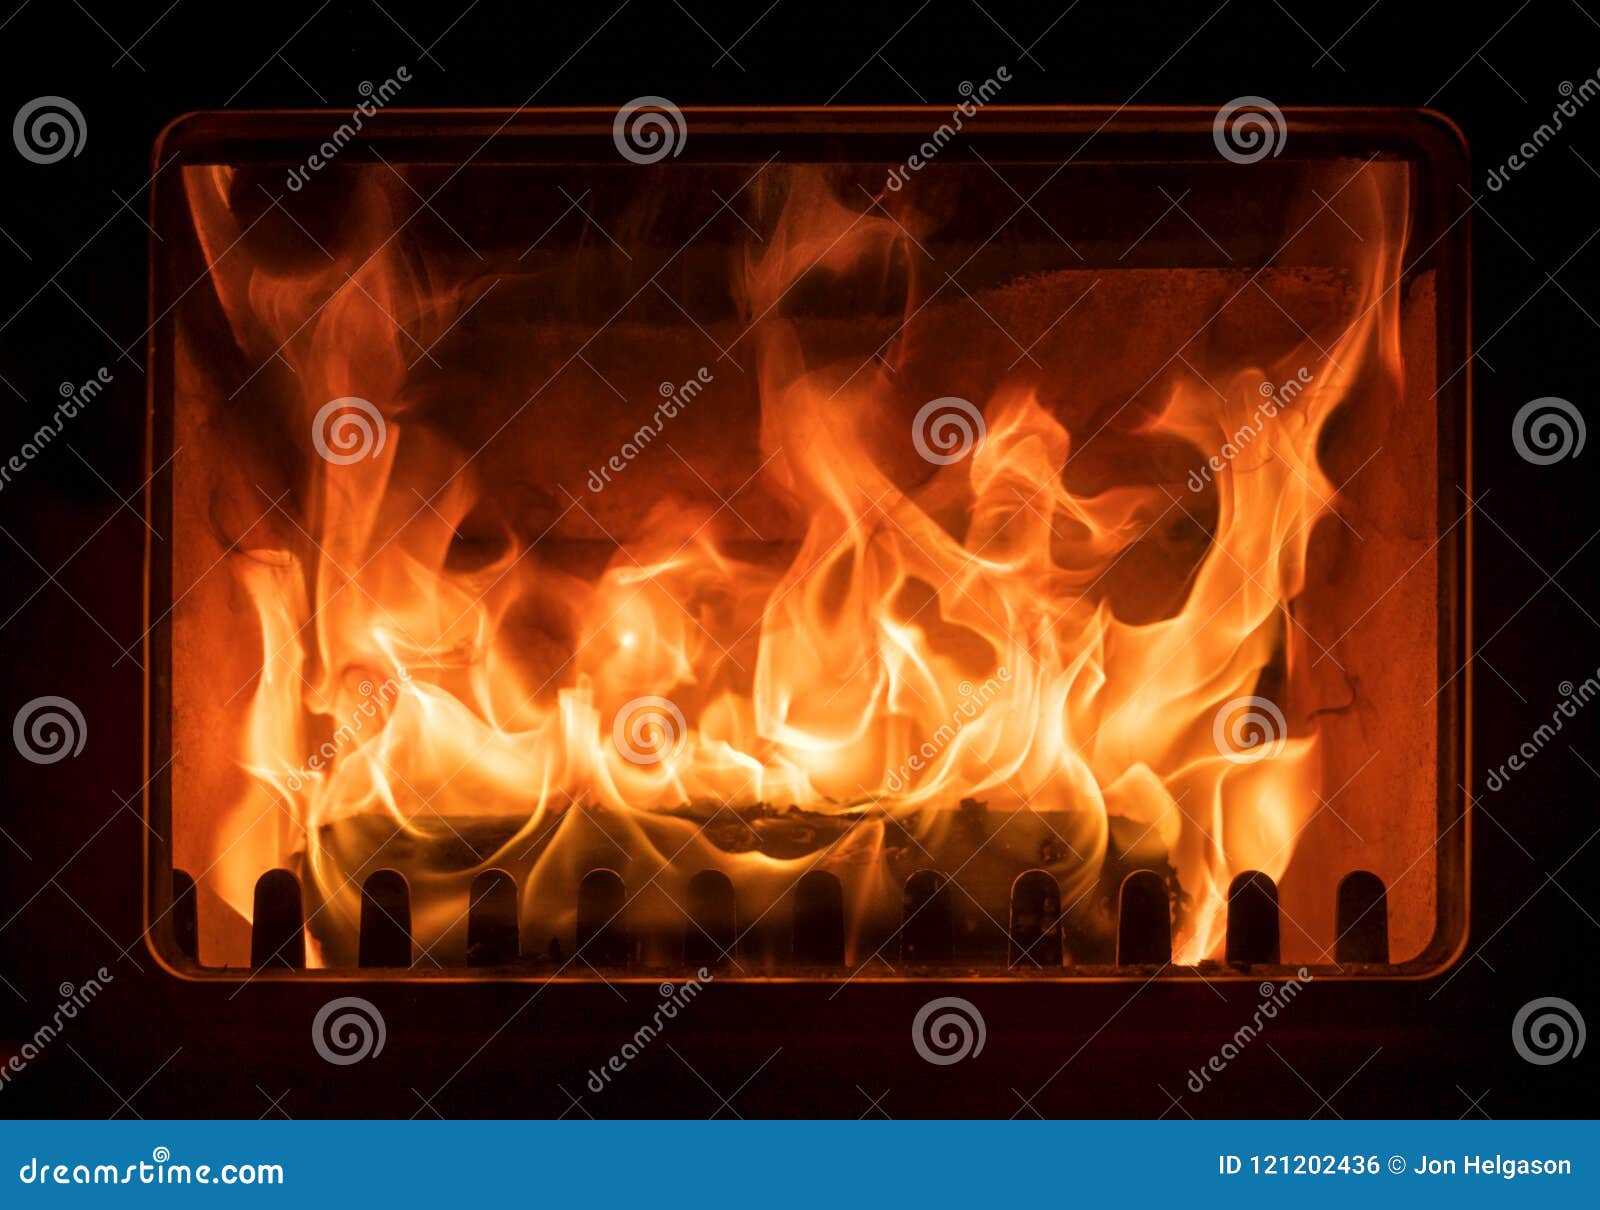 fireplace with burning log